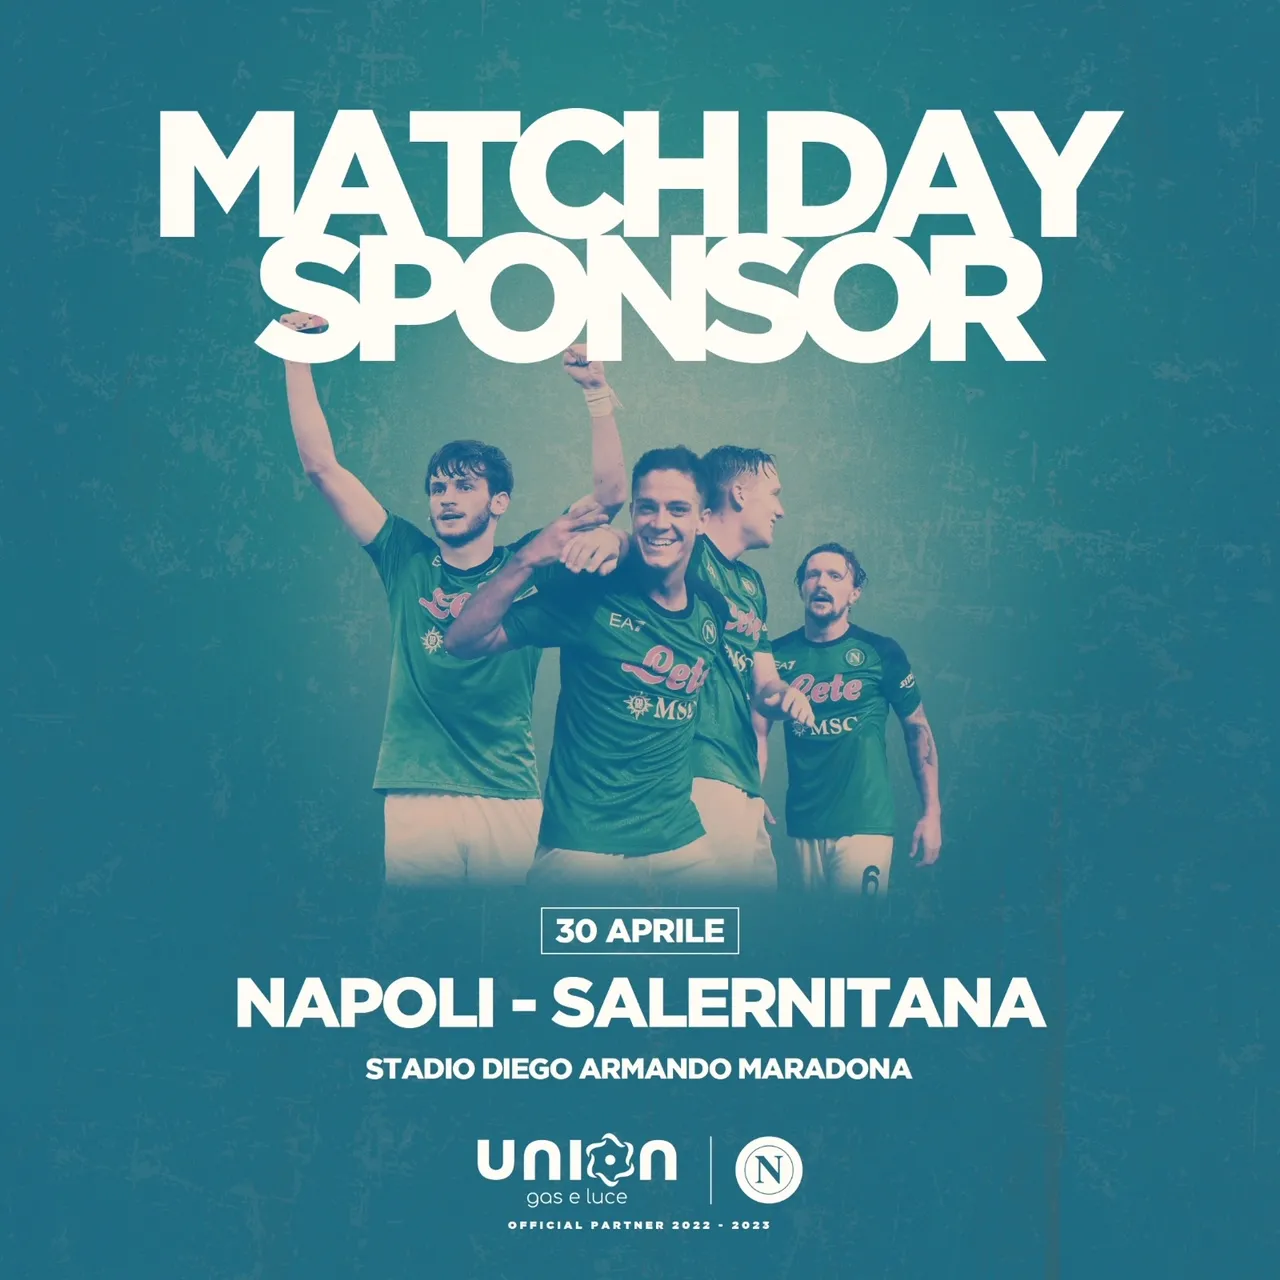 Napoli-Salernitana matchday sponsor di Union gas e luce